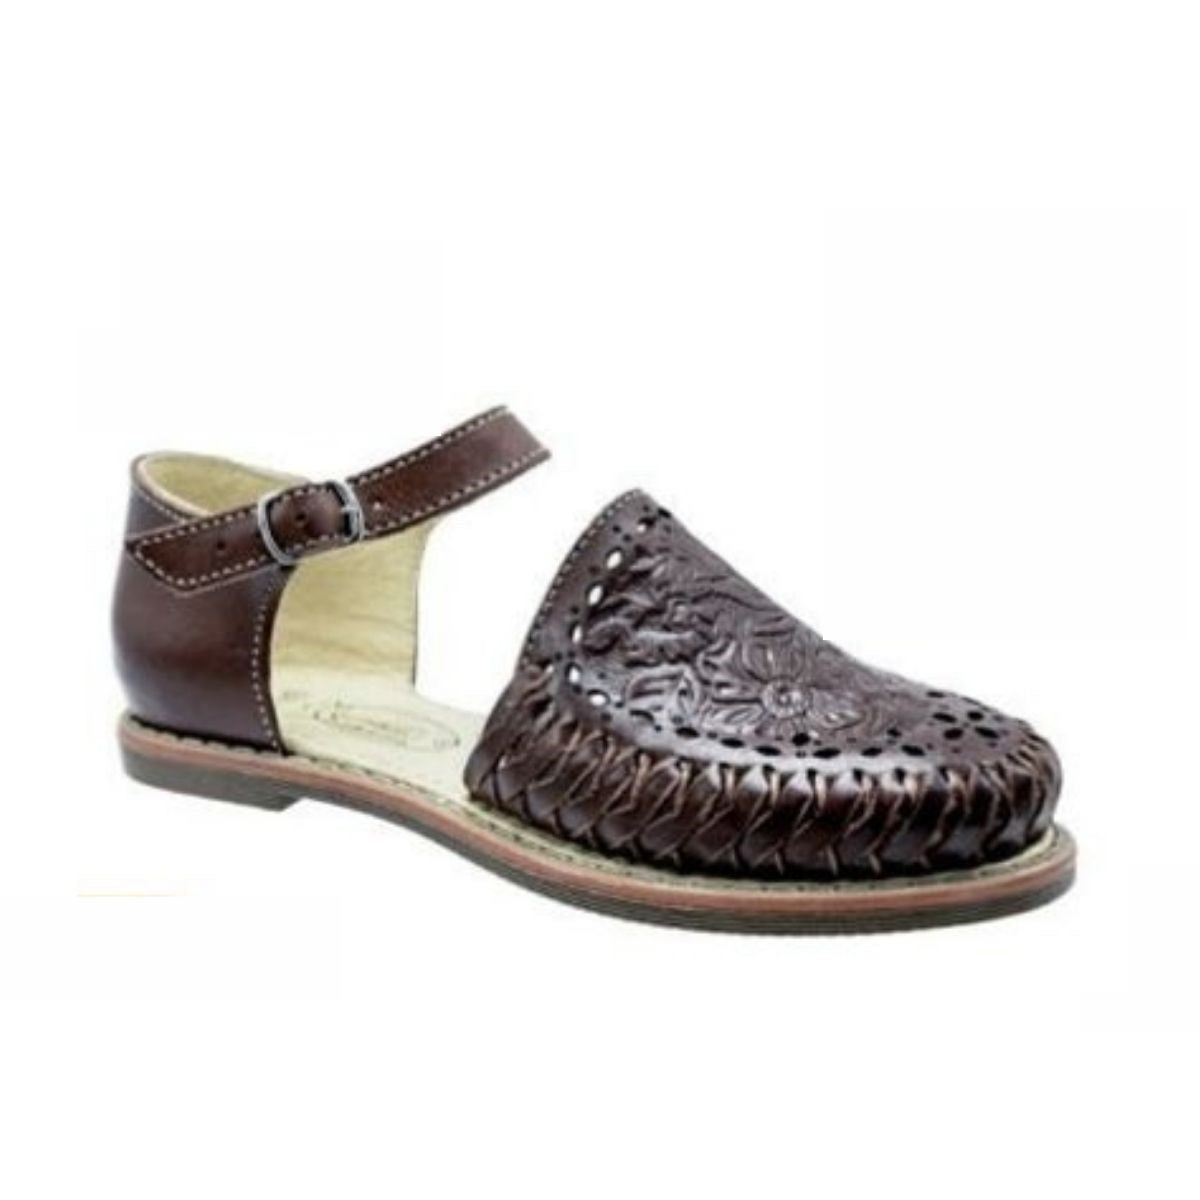 Zapatos Artesanales TM-35383 - Leather Sandals